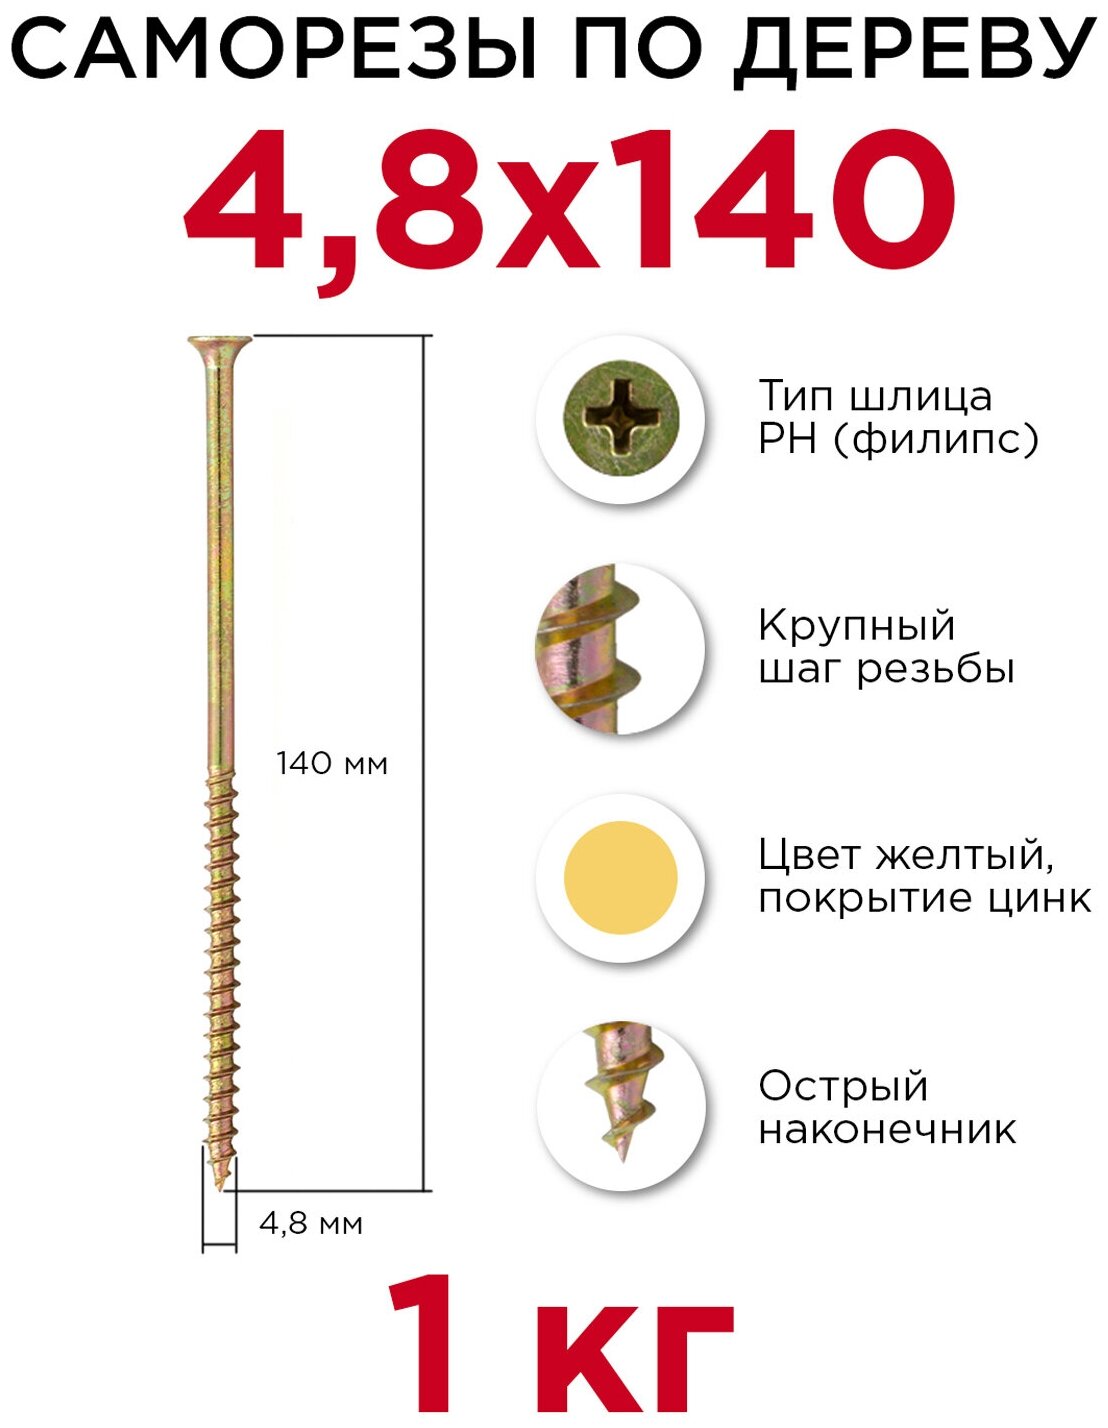 Саморезы по дереву Профикреп 4,8 x 140 мм, 1 кг